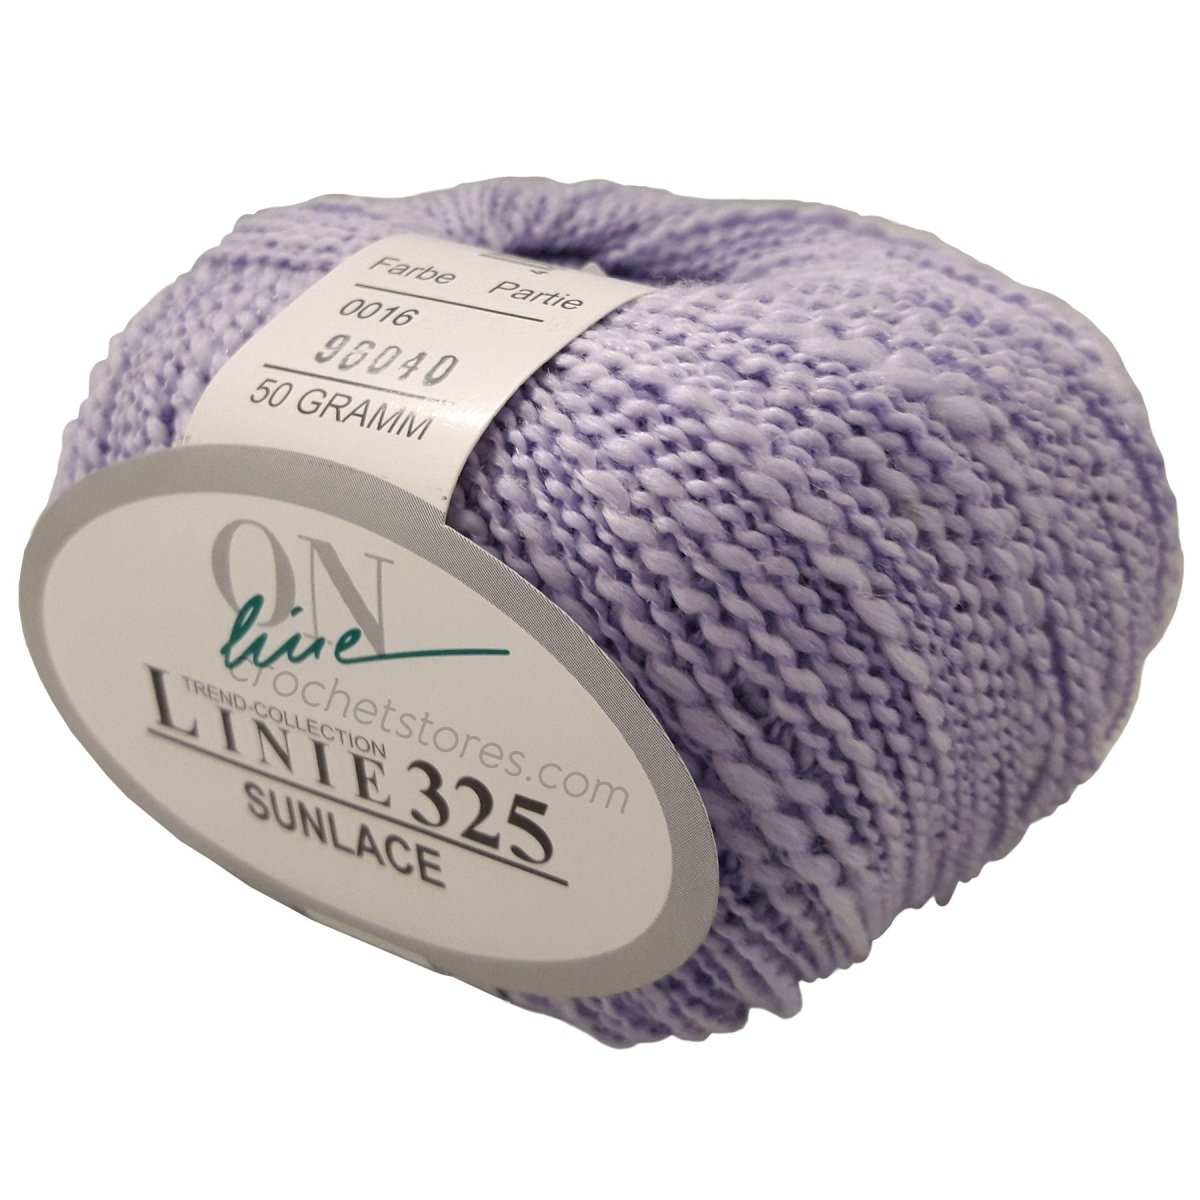 SUNLACE - Crochetstores110325-0164014366143956